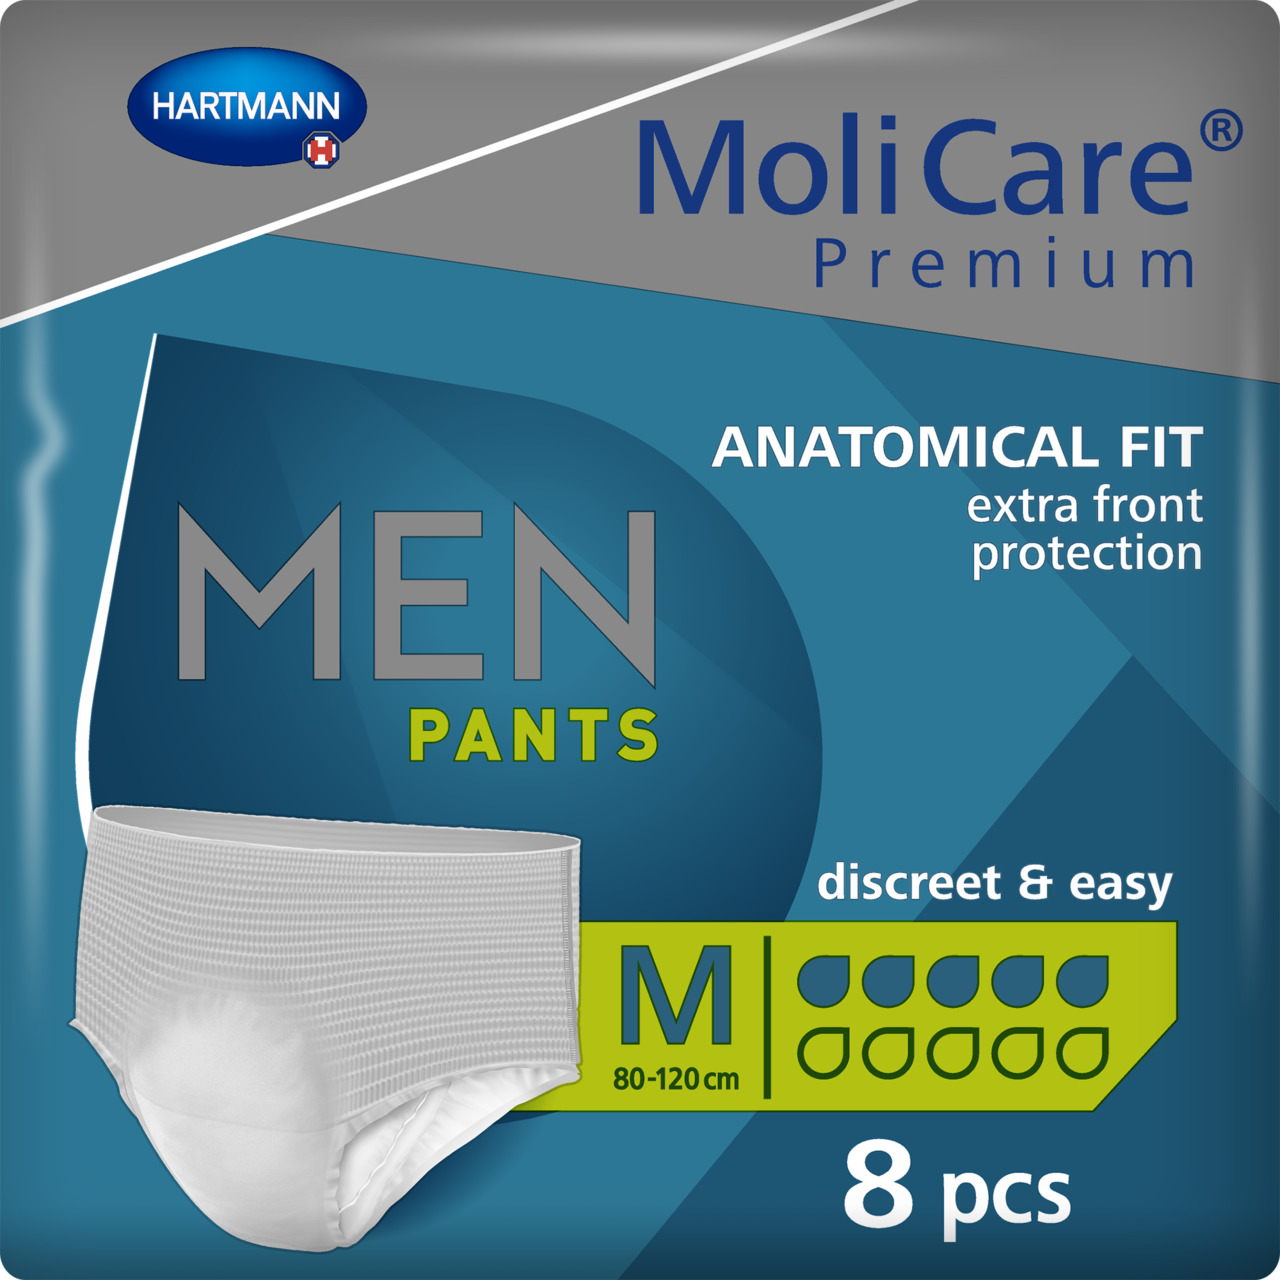 MoliCare Premium Form Pants 5 Drops